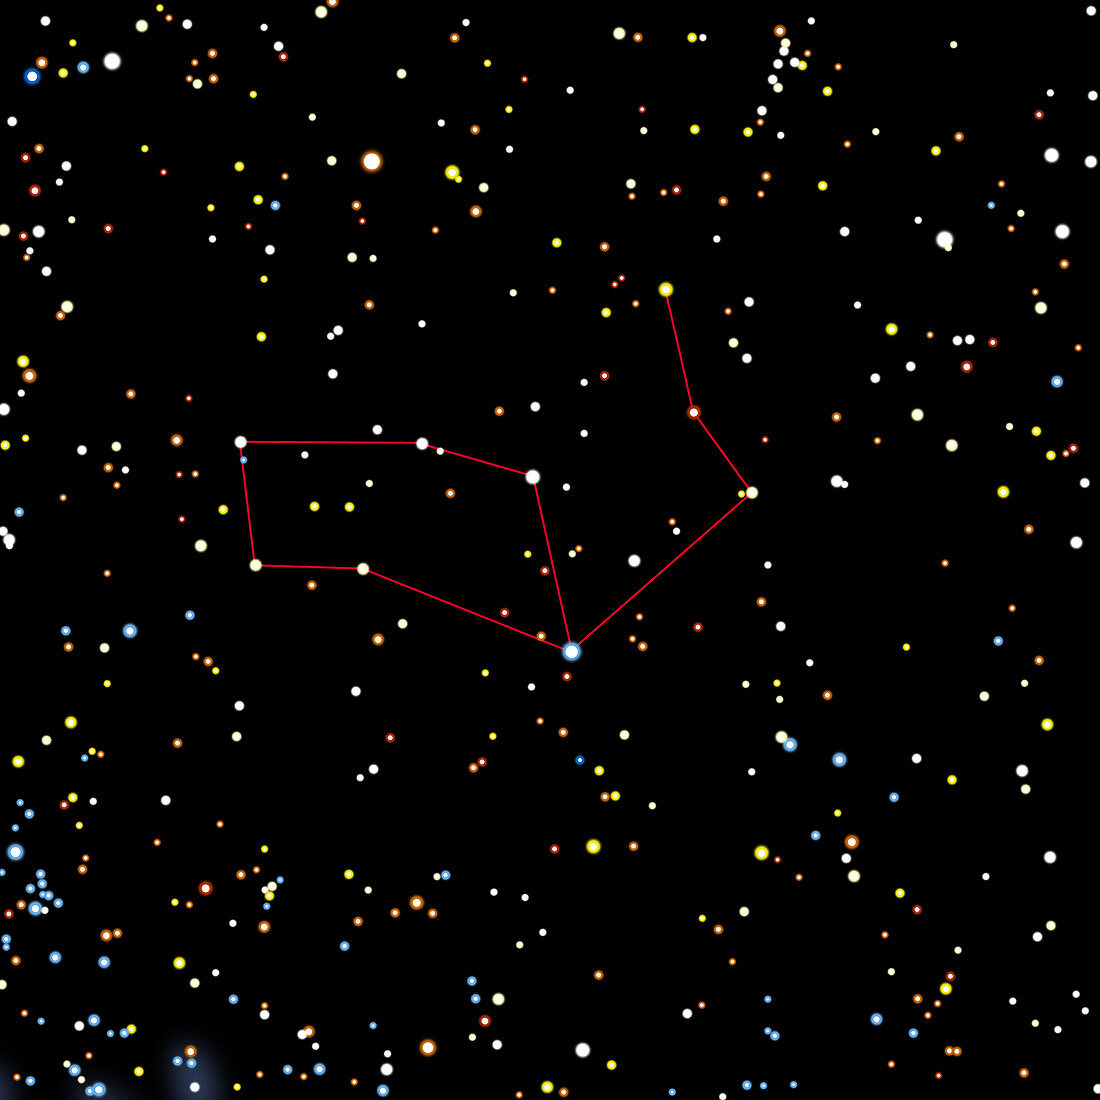 Artwork of the constellation of Virgo